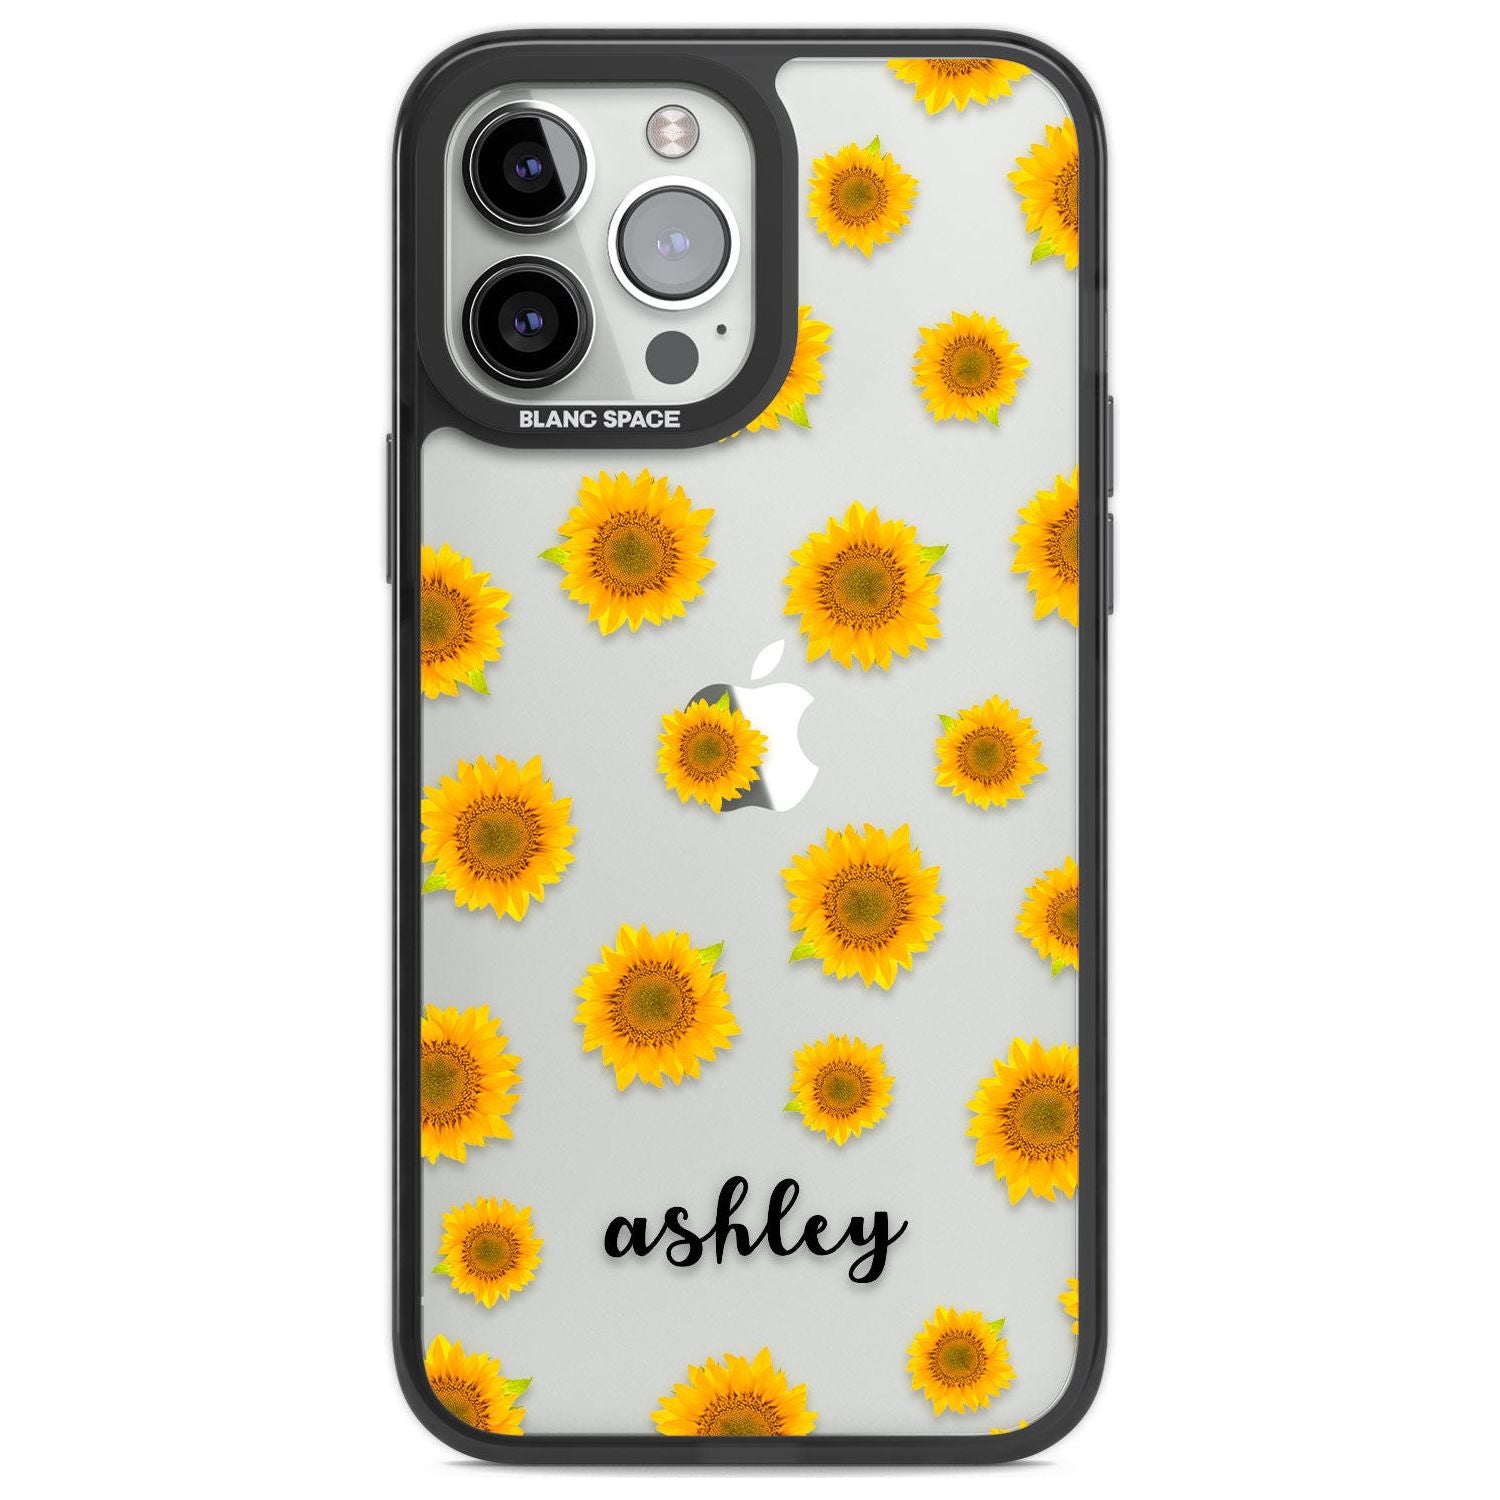 Personalised Sunflowers & Cursive Custom Phone Case iPhone 13 Pro Max / Black Impact Case,iPhone 14 Pro Max / Black Impact Case Blanc Space